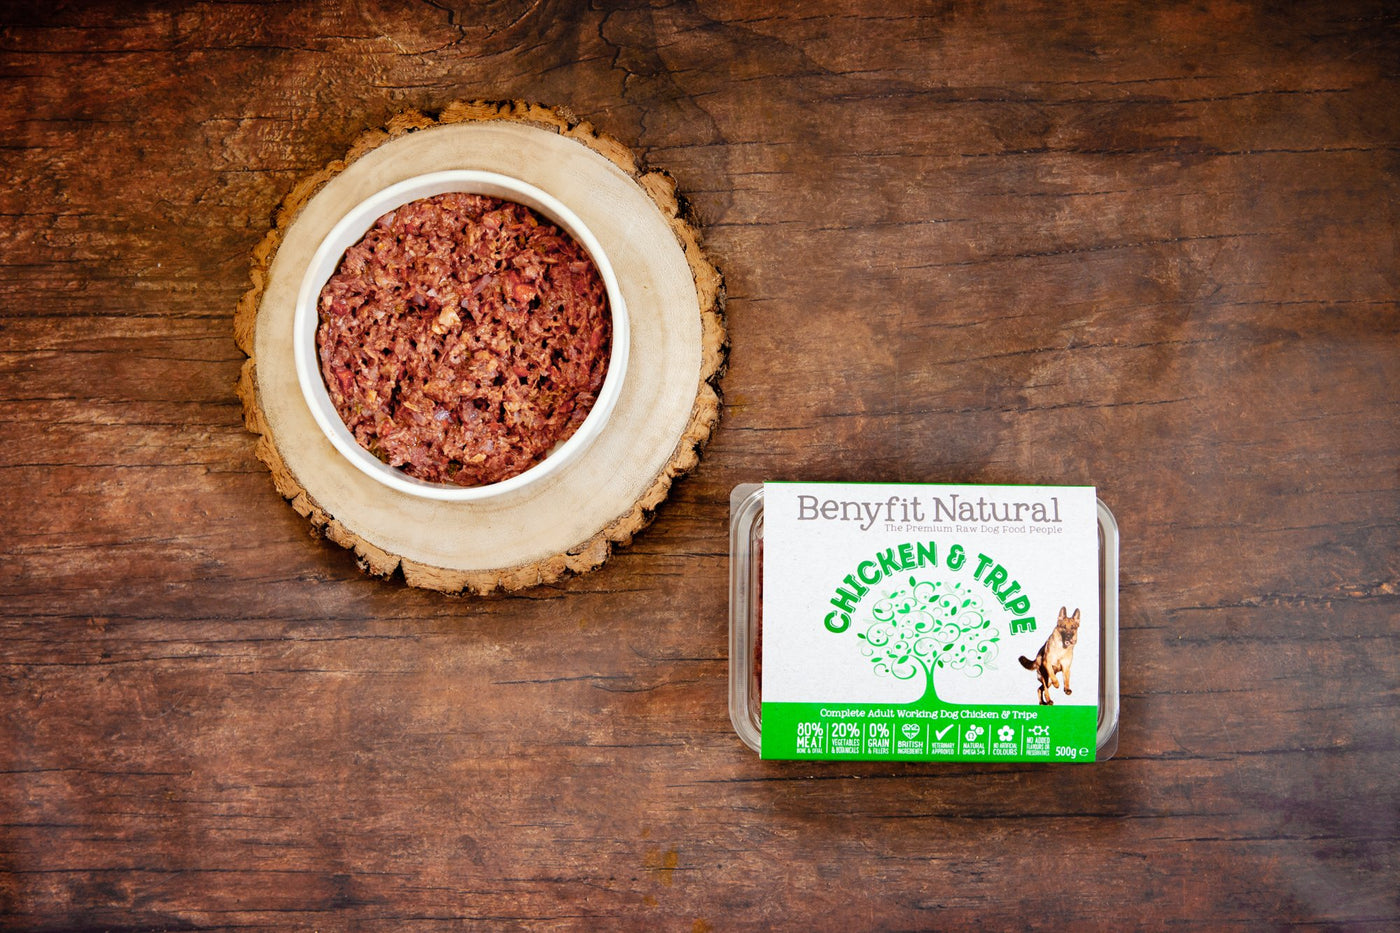 Benyfit Natural Chicken & Tripe Premium Raw Dog Food.